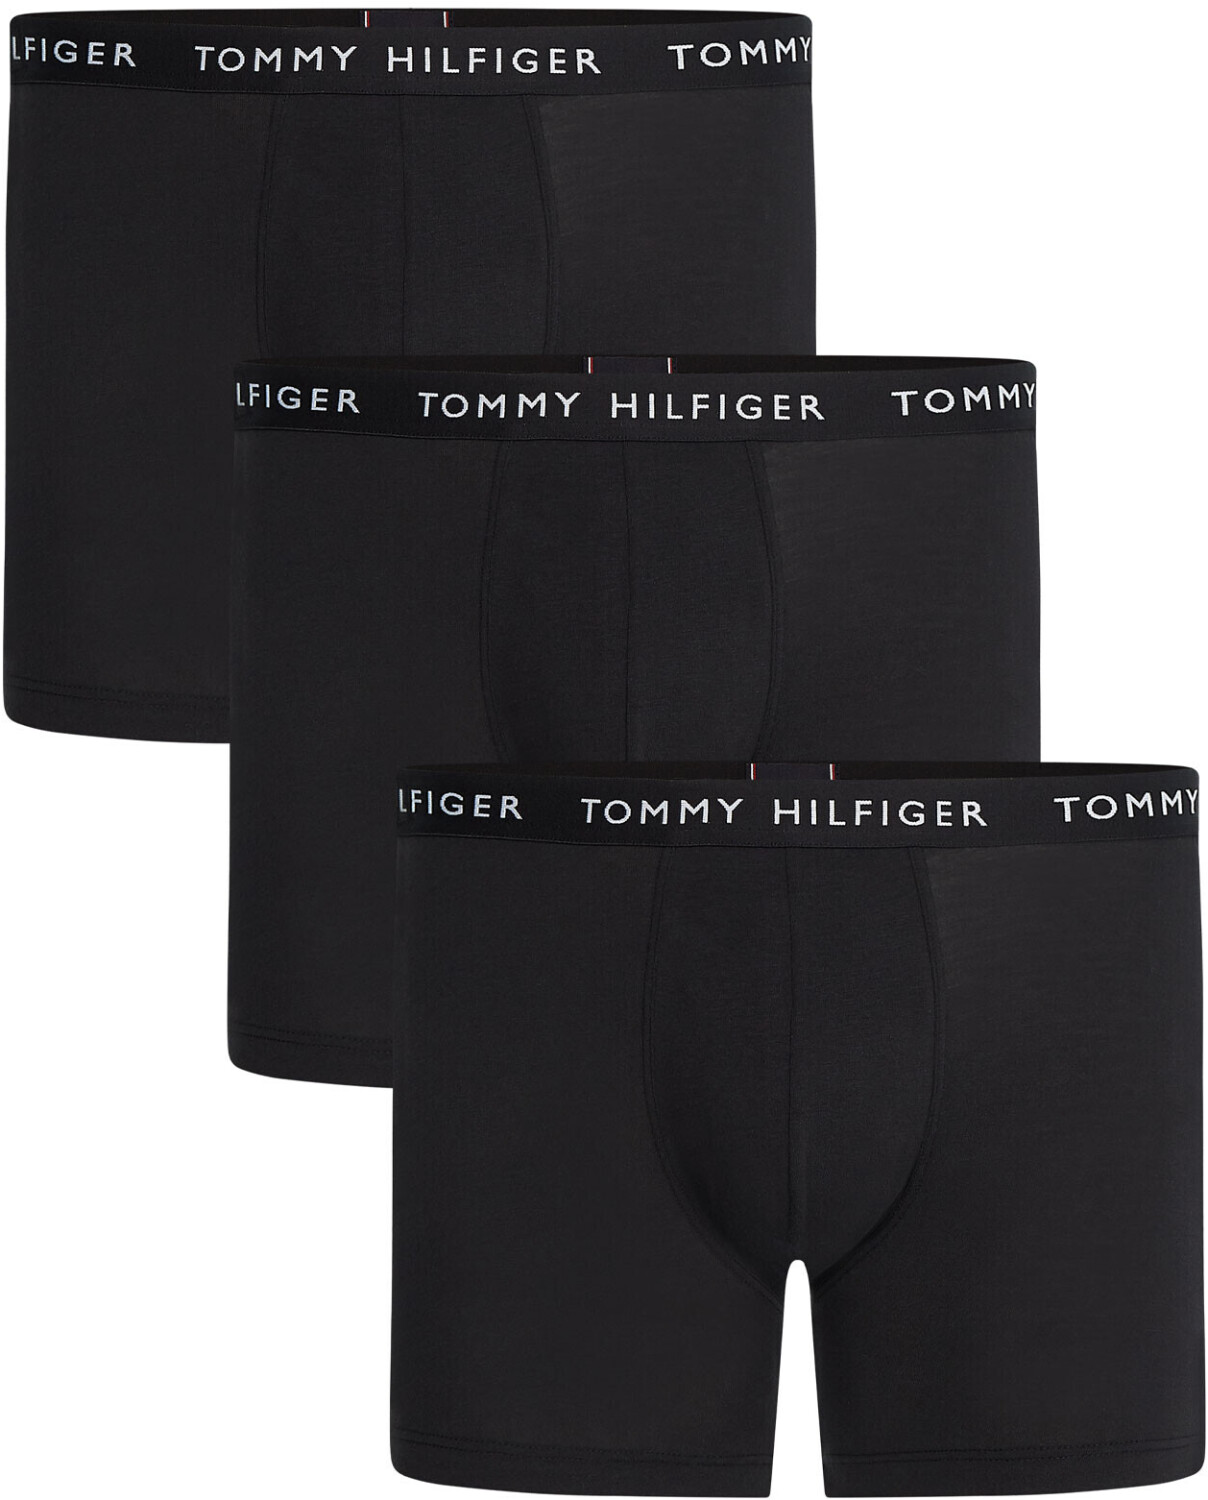 Tommy Hilfiger Boxershorts 3-Pack Boxer Brief Black Sublunar White (0TG)